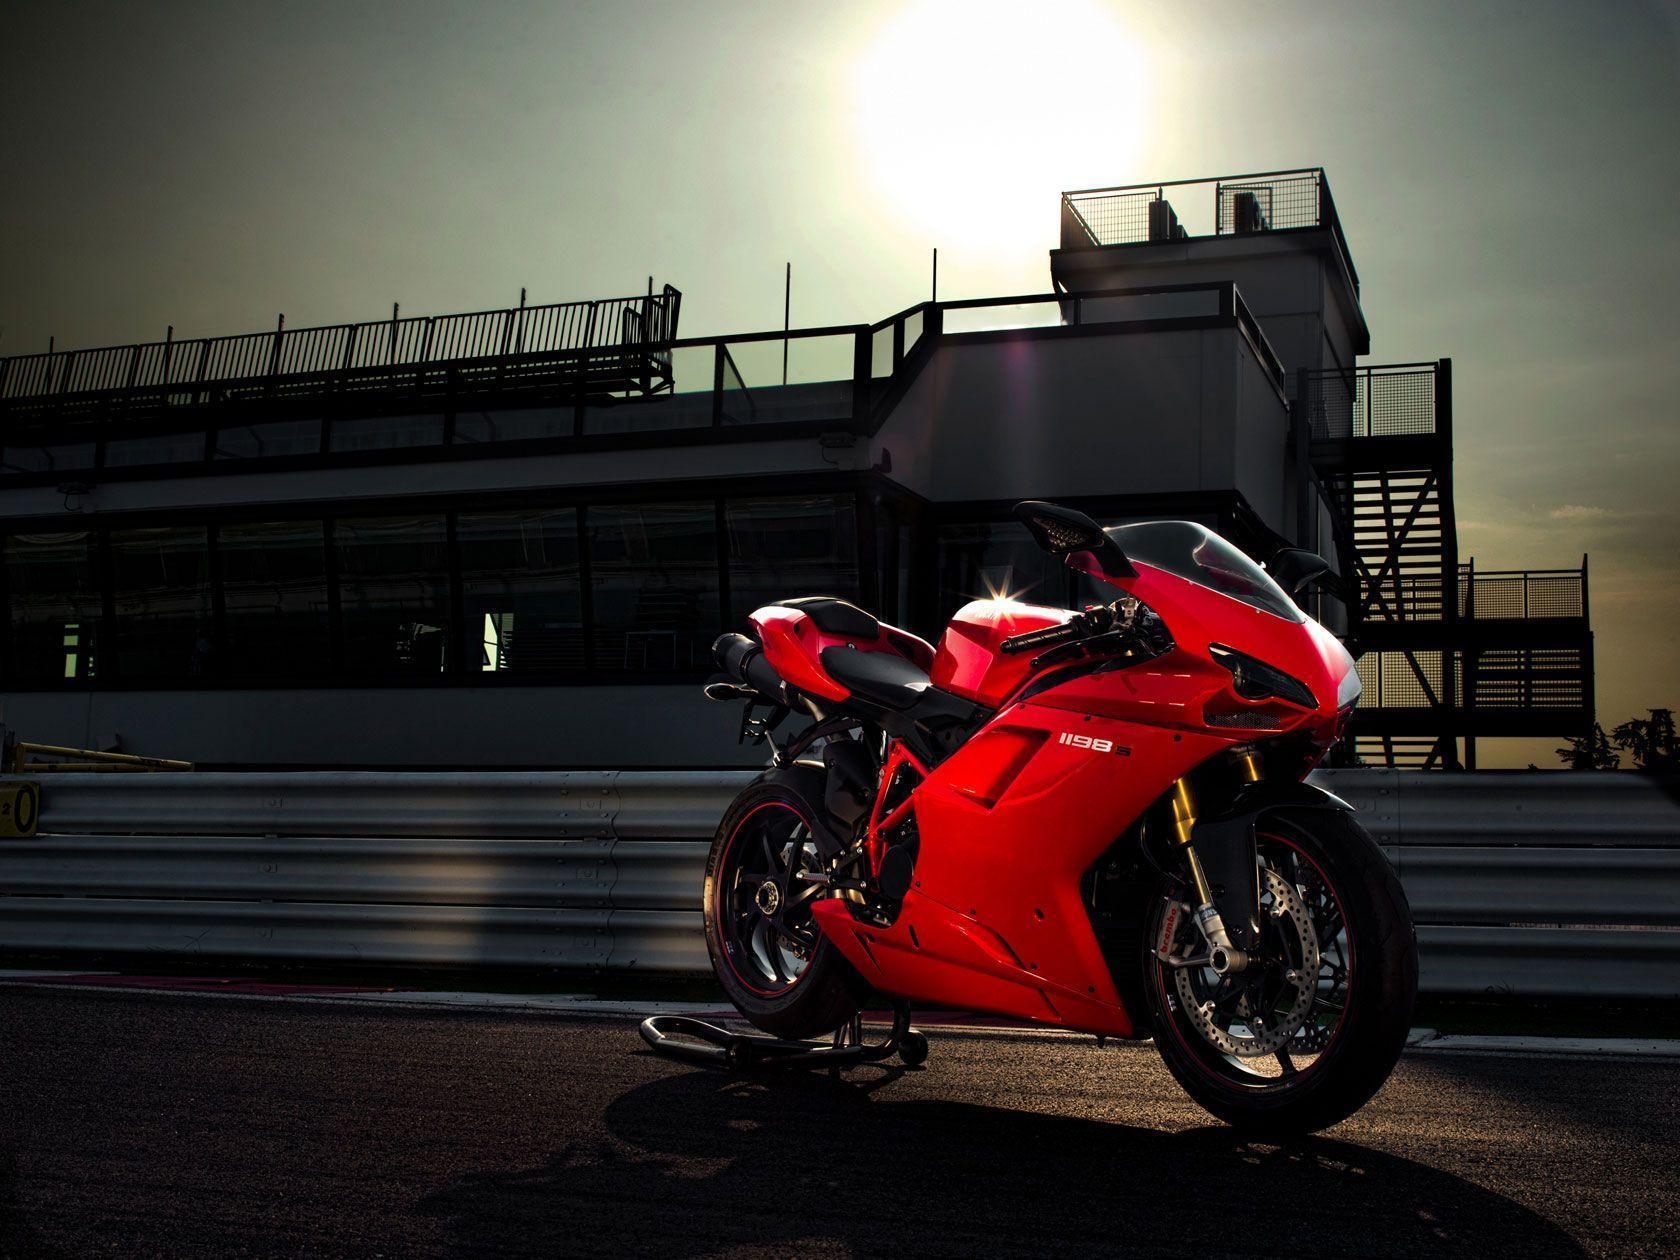 Ducati Image. Original HD Wallpaper Collection